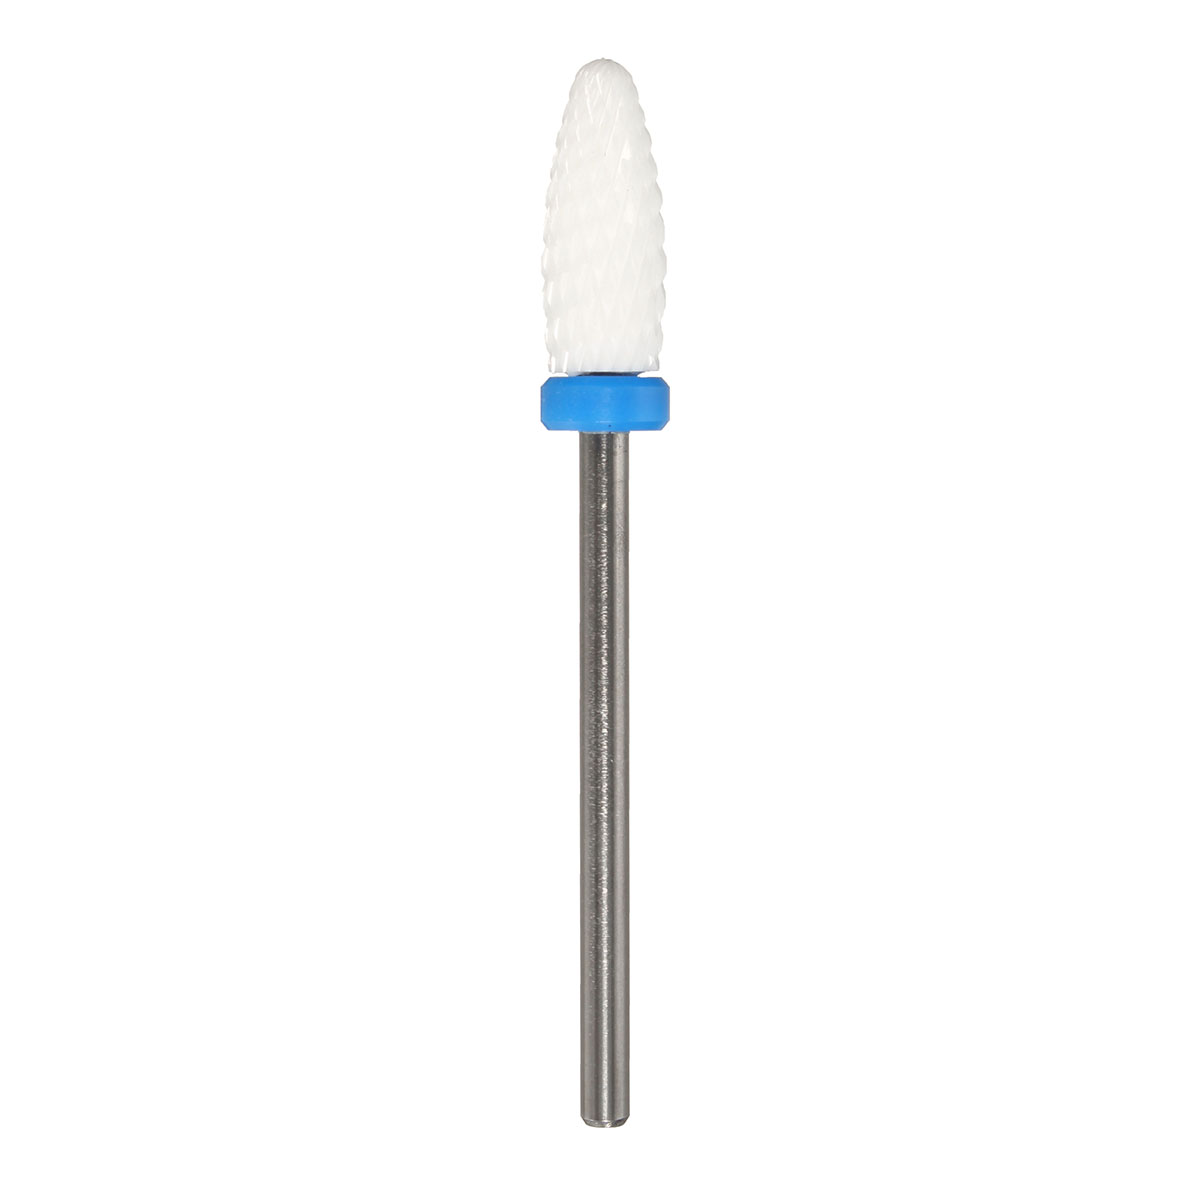 5pcs-Ceramic-Nail-Drill-Bit-Set-Smooth-Tapered-Brush-Rotary-File-Cuticle-Manicure-Pedicure-Salon-Kit-1129869-7